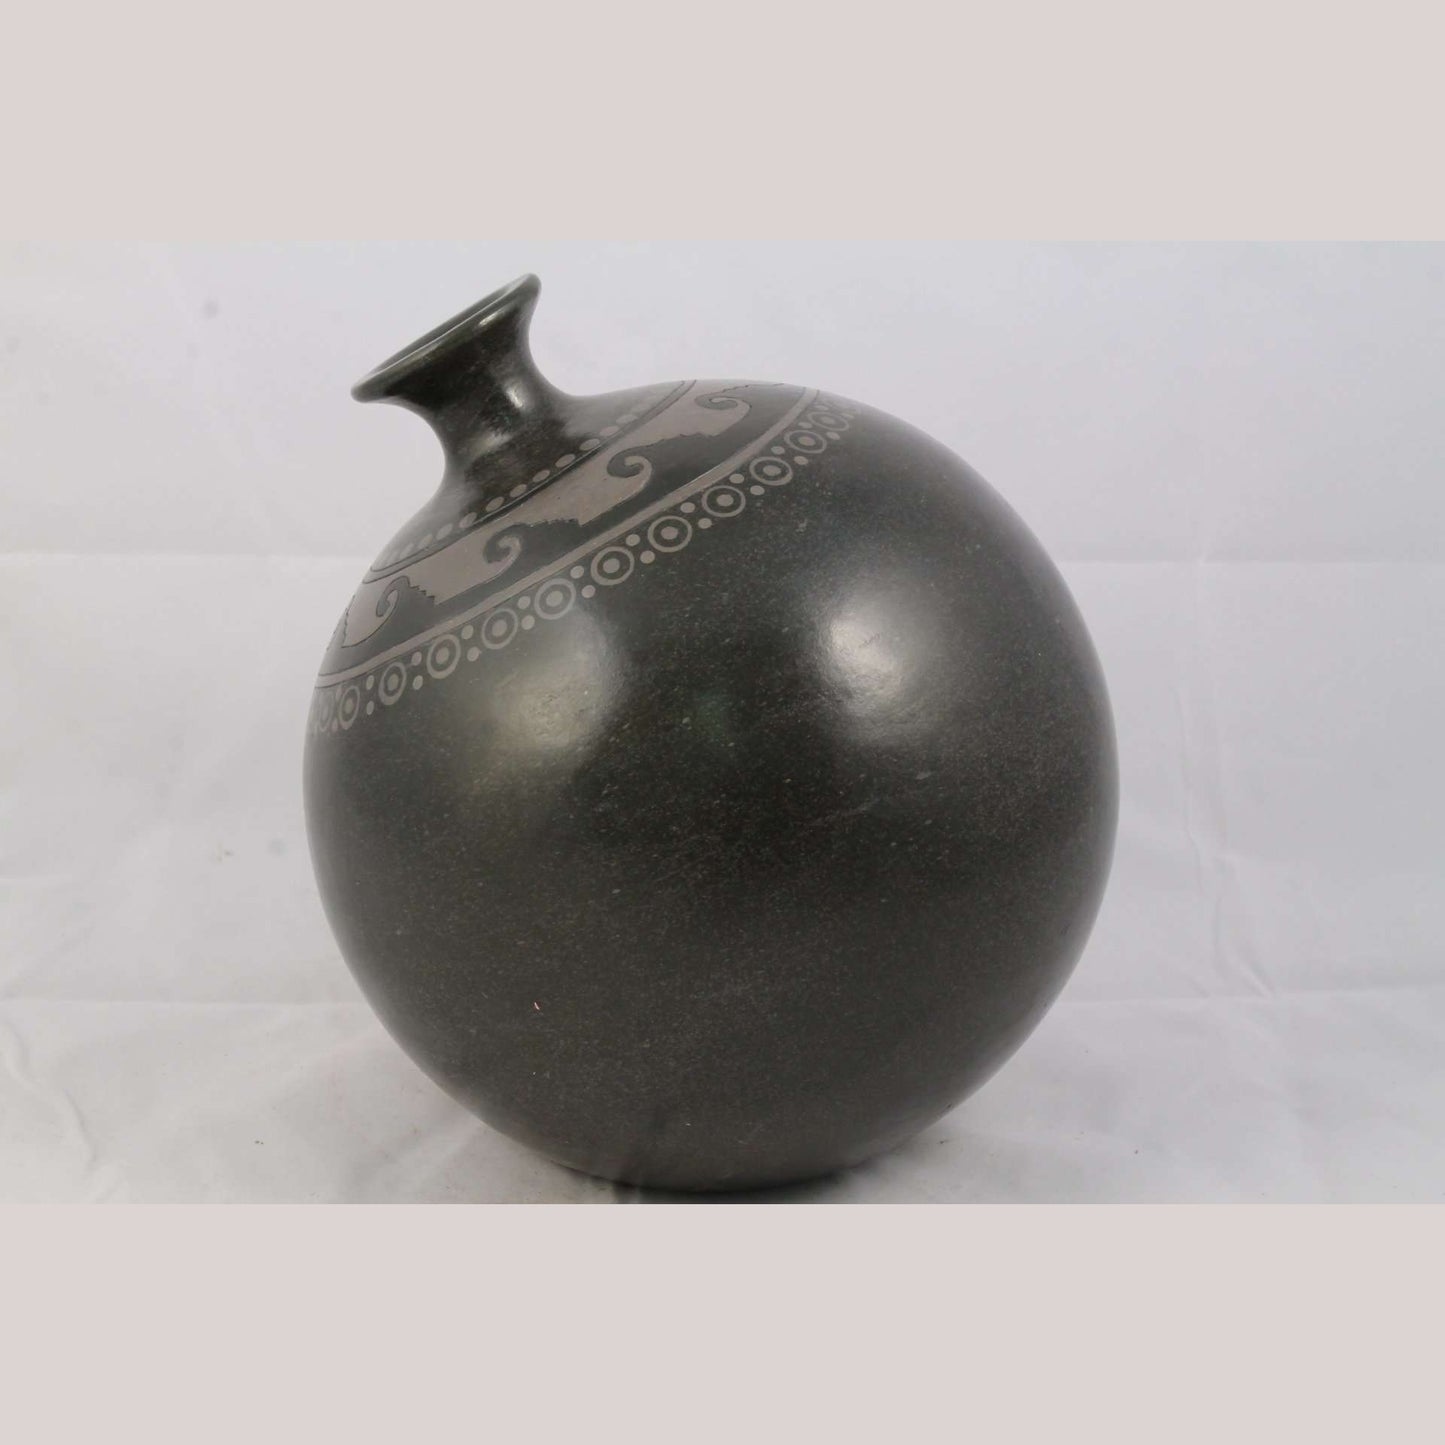 Large Jar Vessel Mexican Ceramic from Humberto Trejo